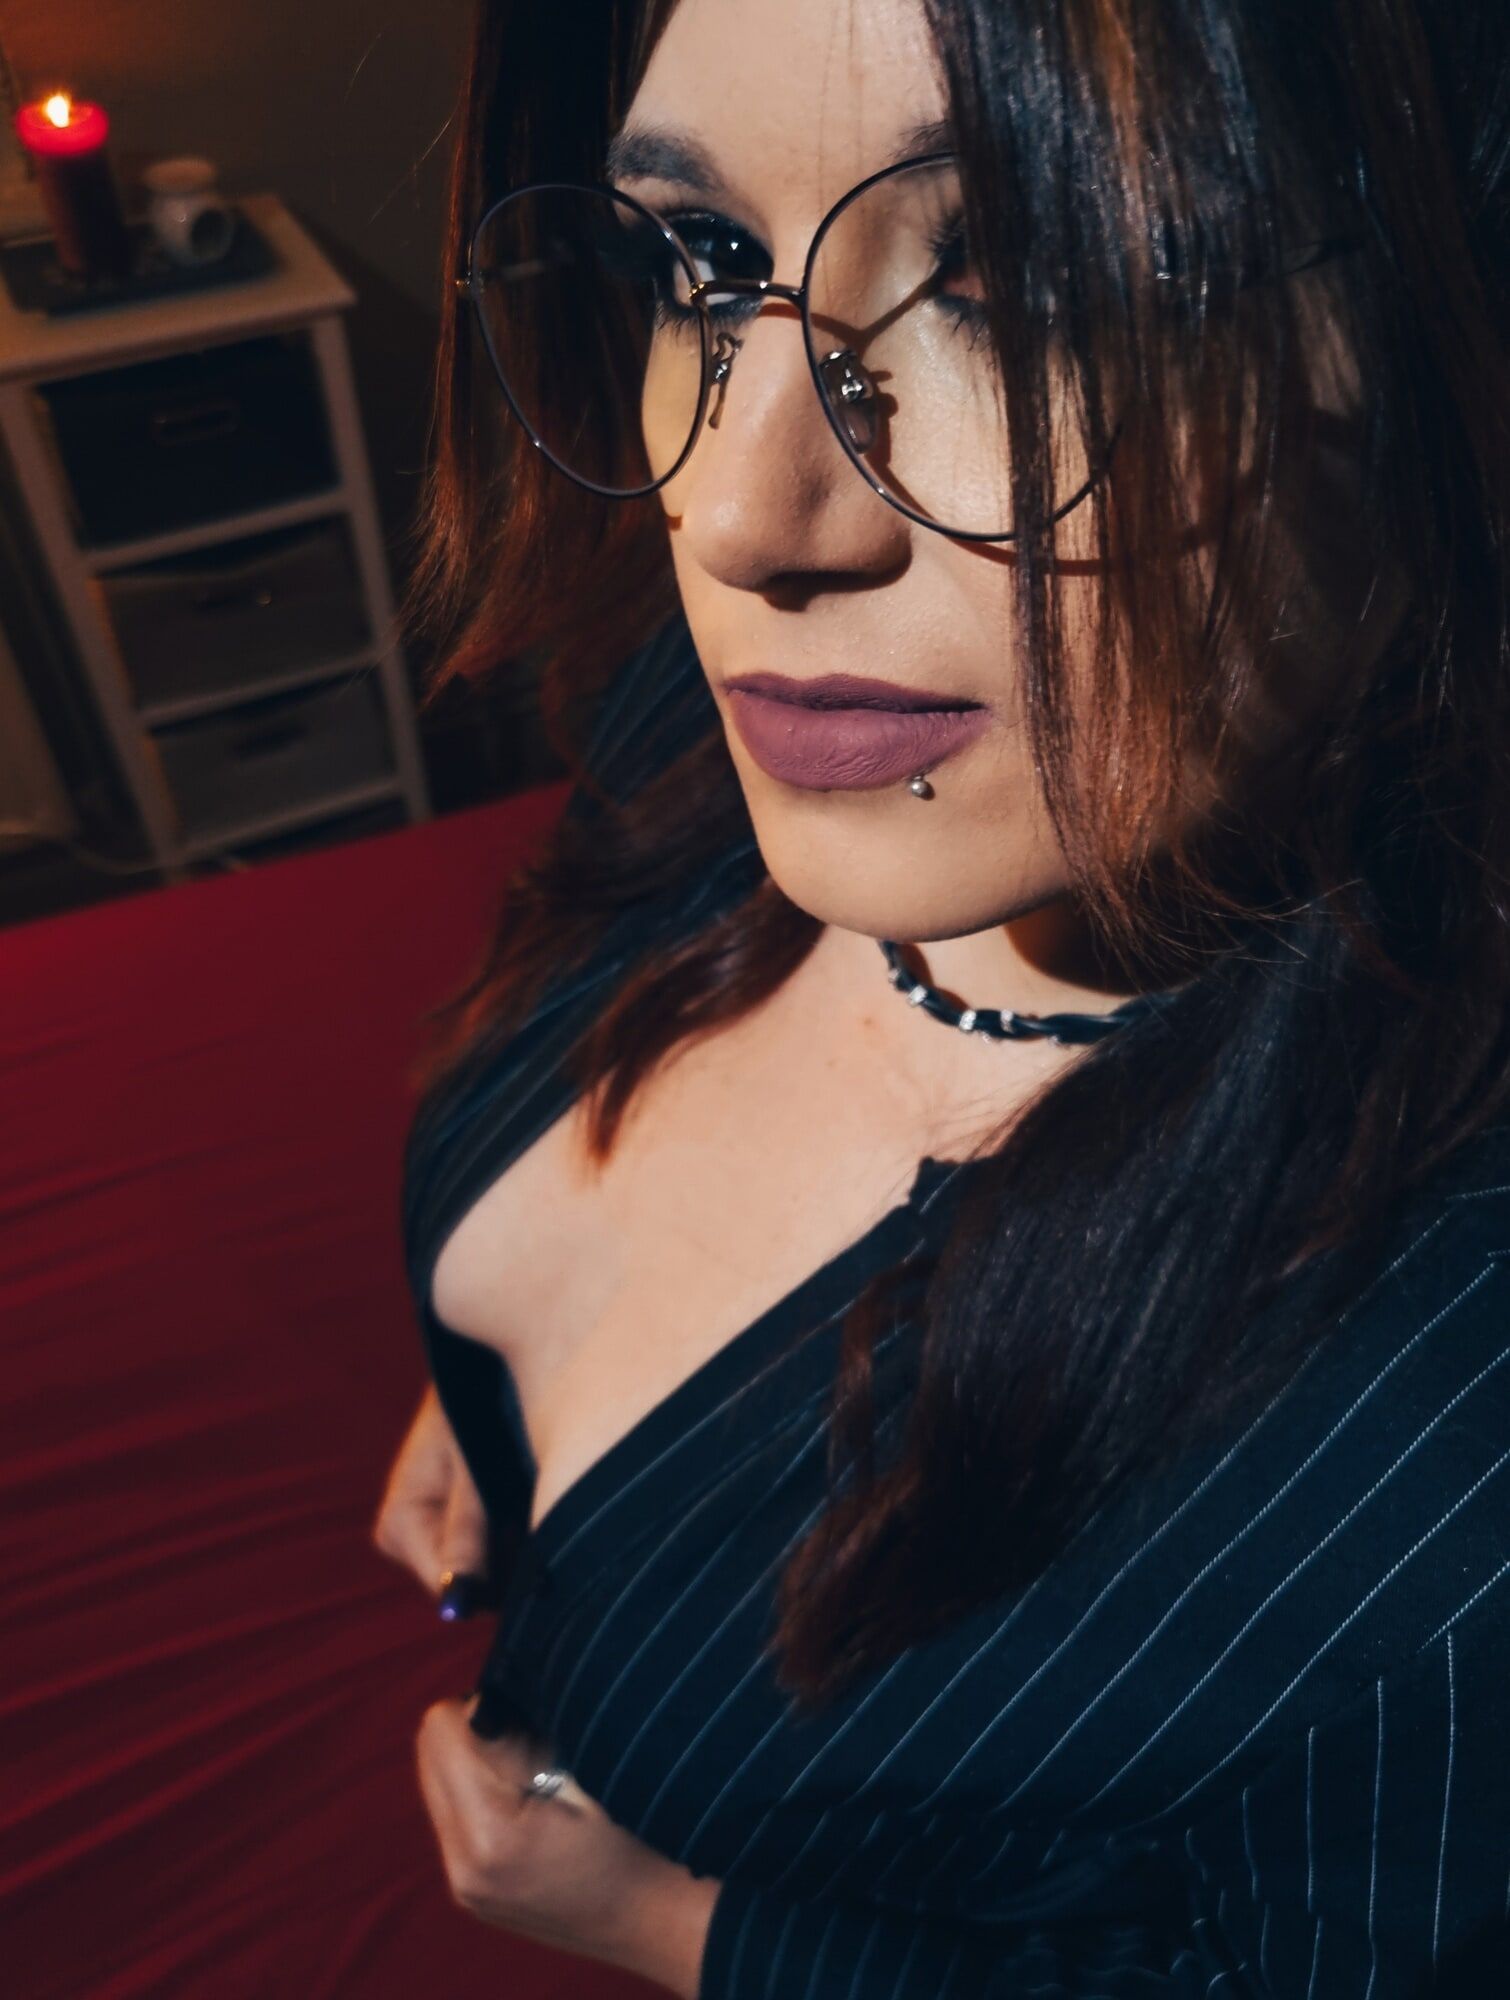 Your new sexy secretary 🔥 #3